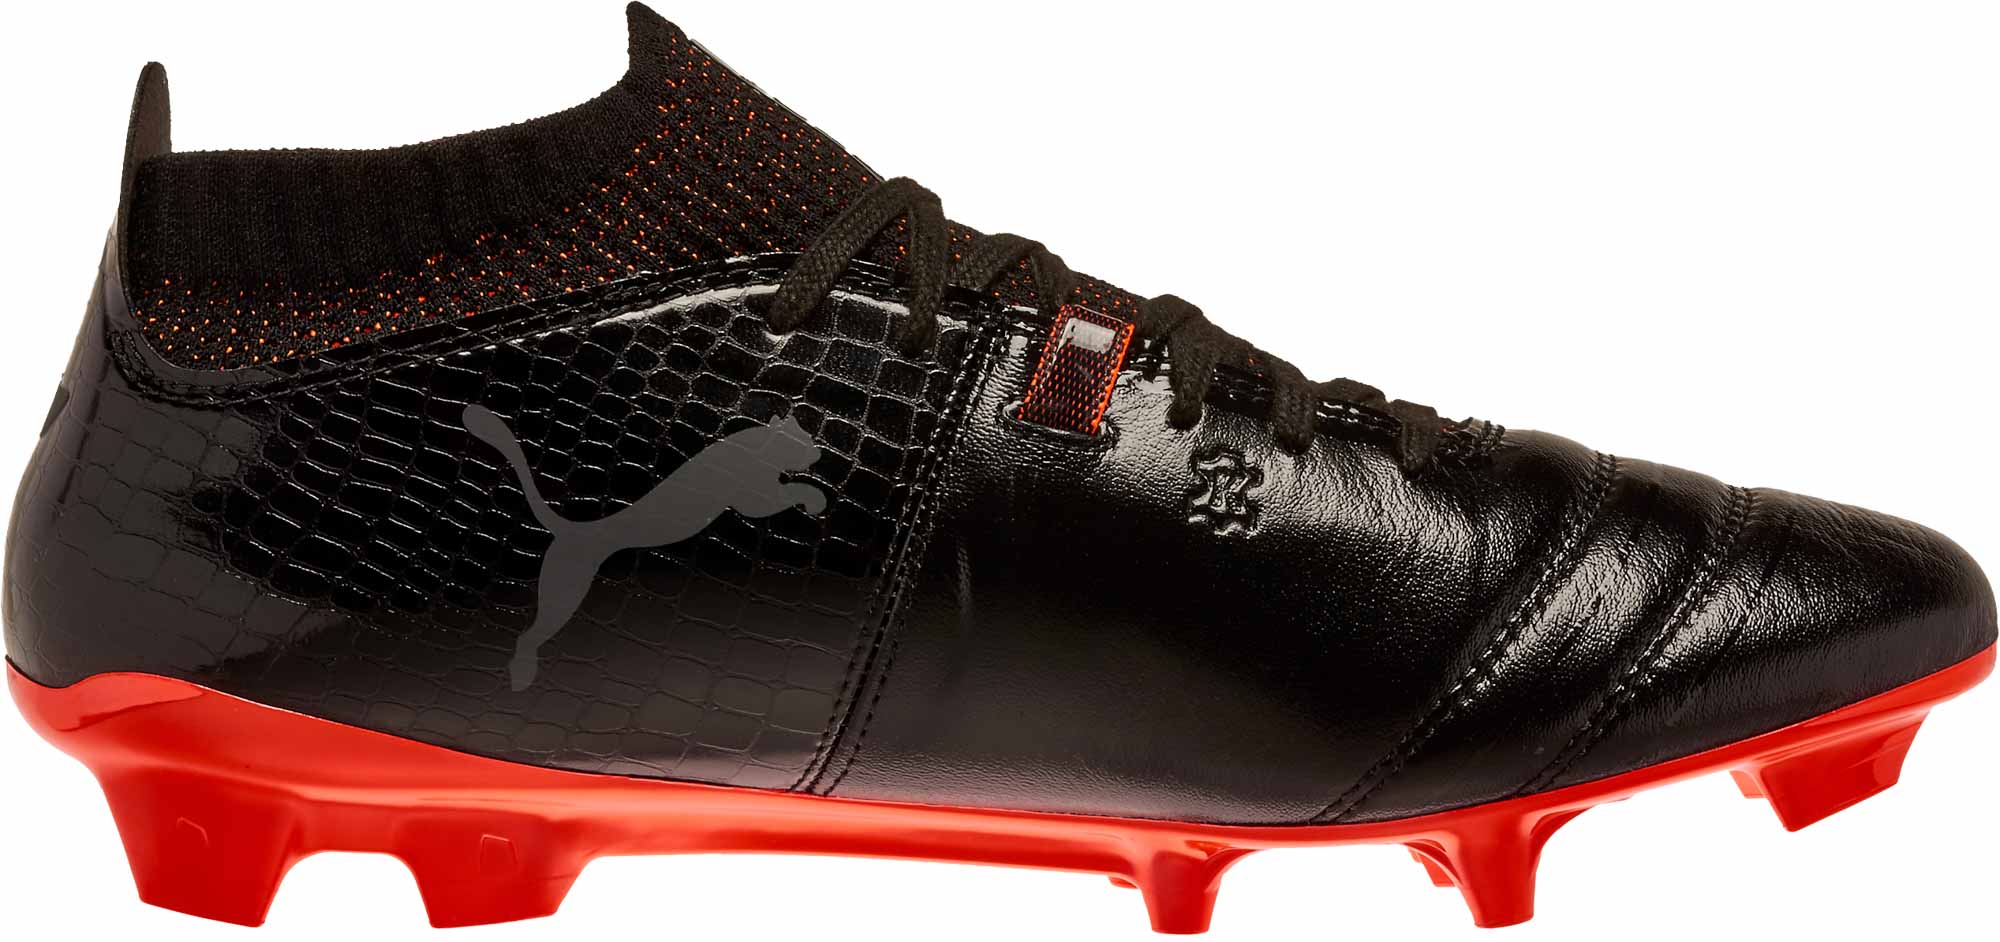 Shoes FG Black Lux Puma - Soccer One Puma